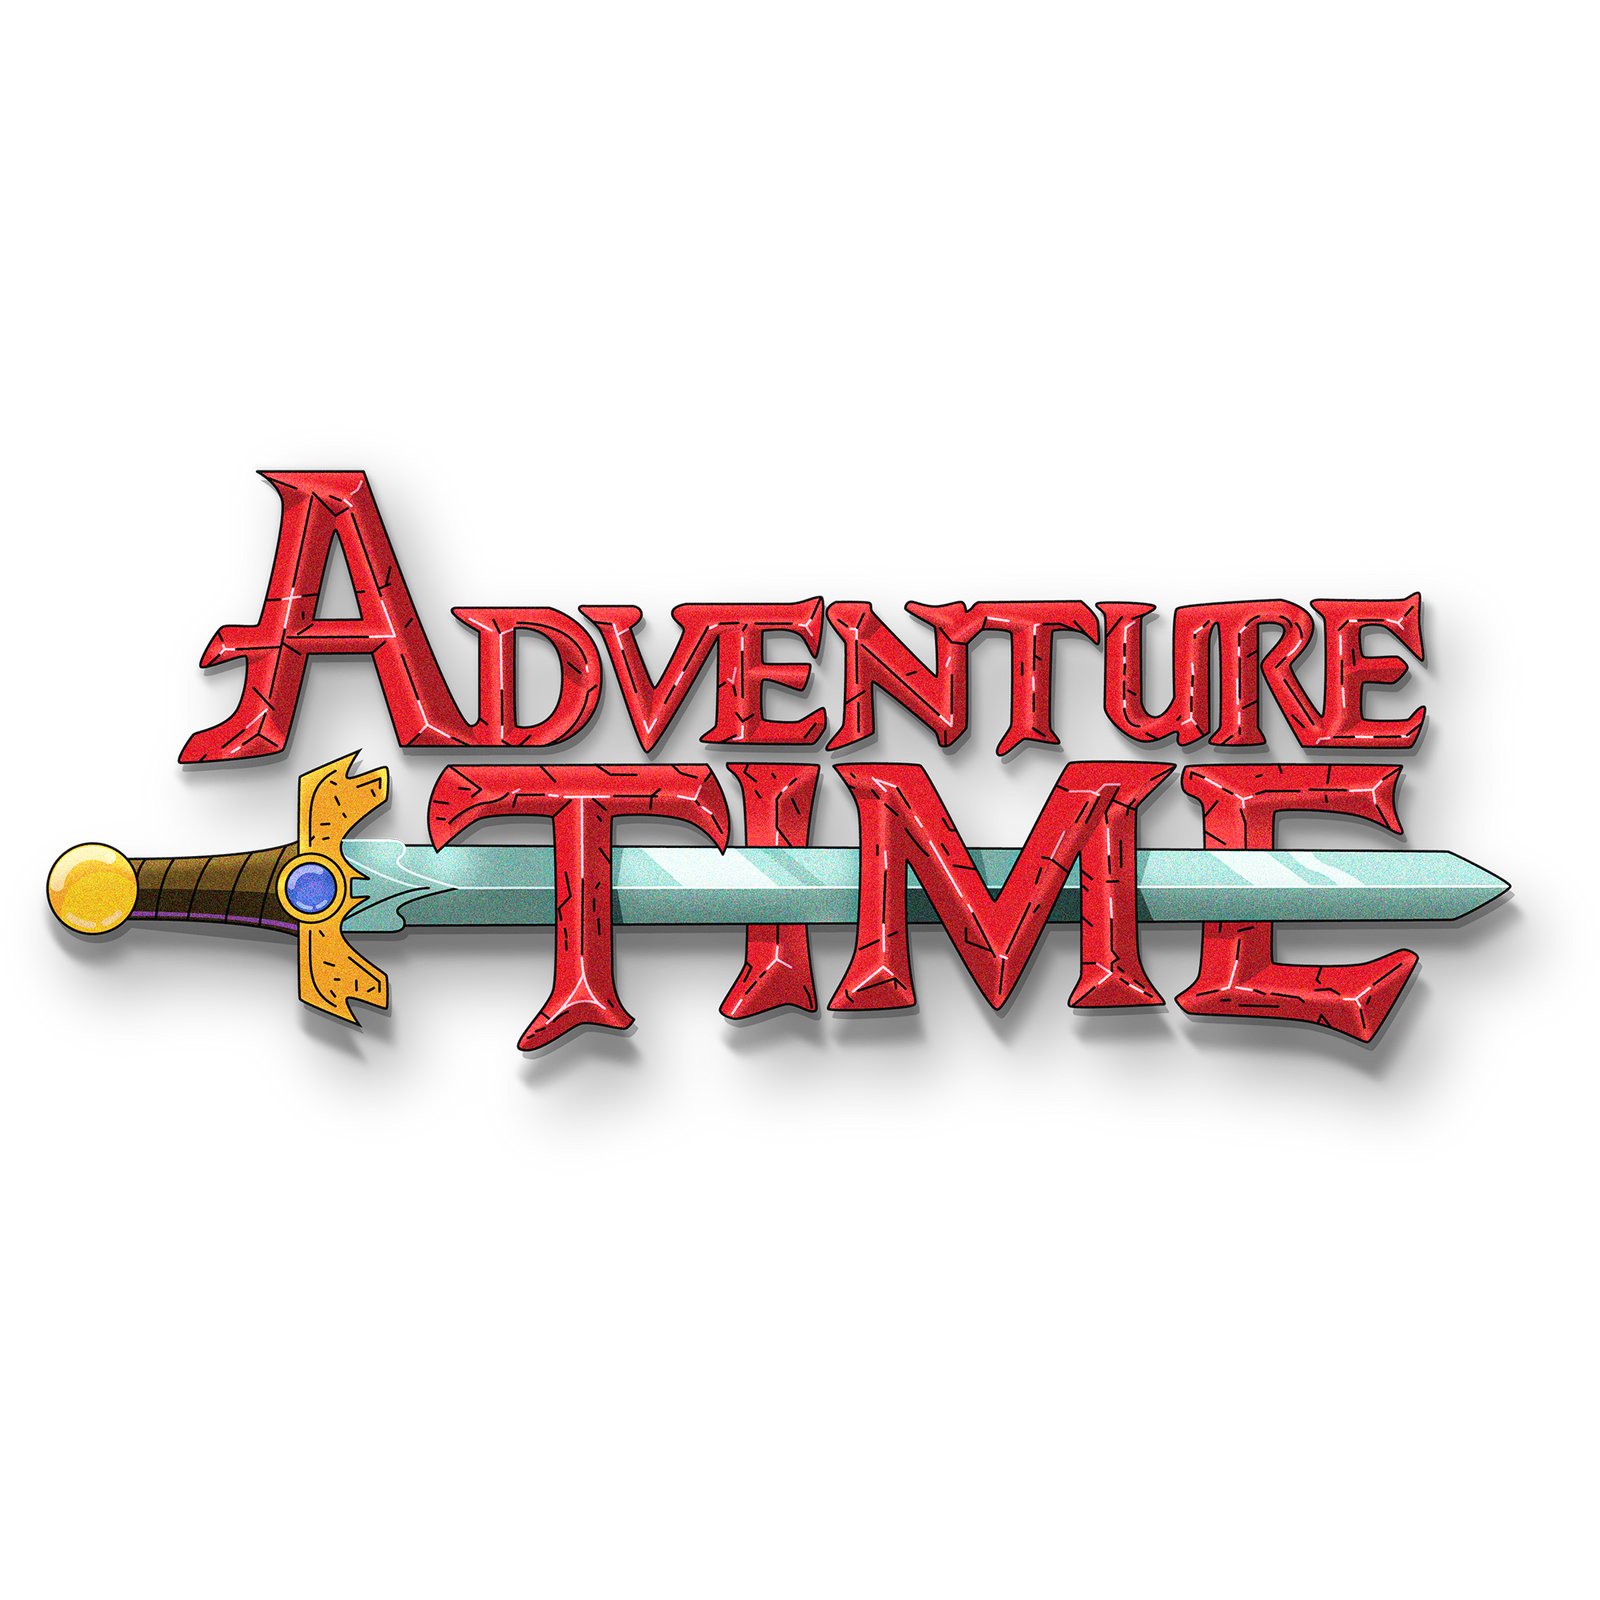 Adventure Time logo.